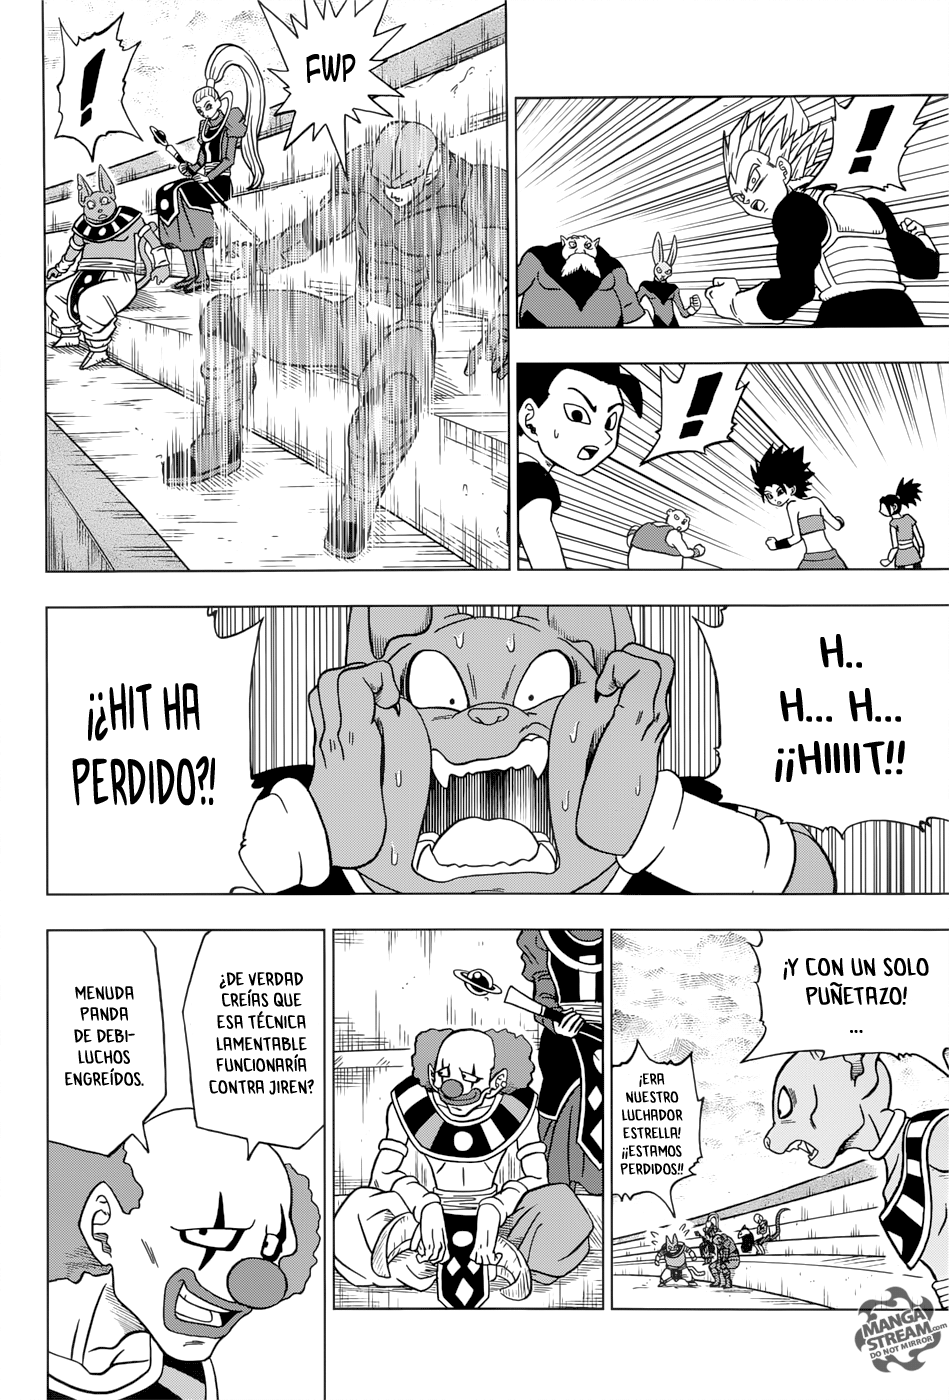 Dragon Ball Super Capítulo 35 - Manga Online